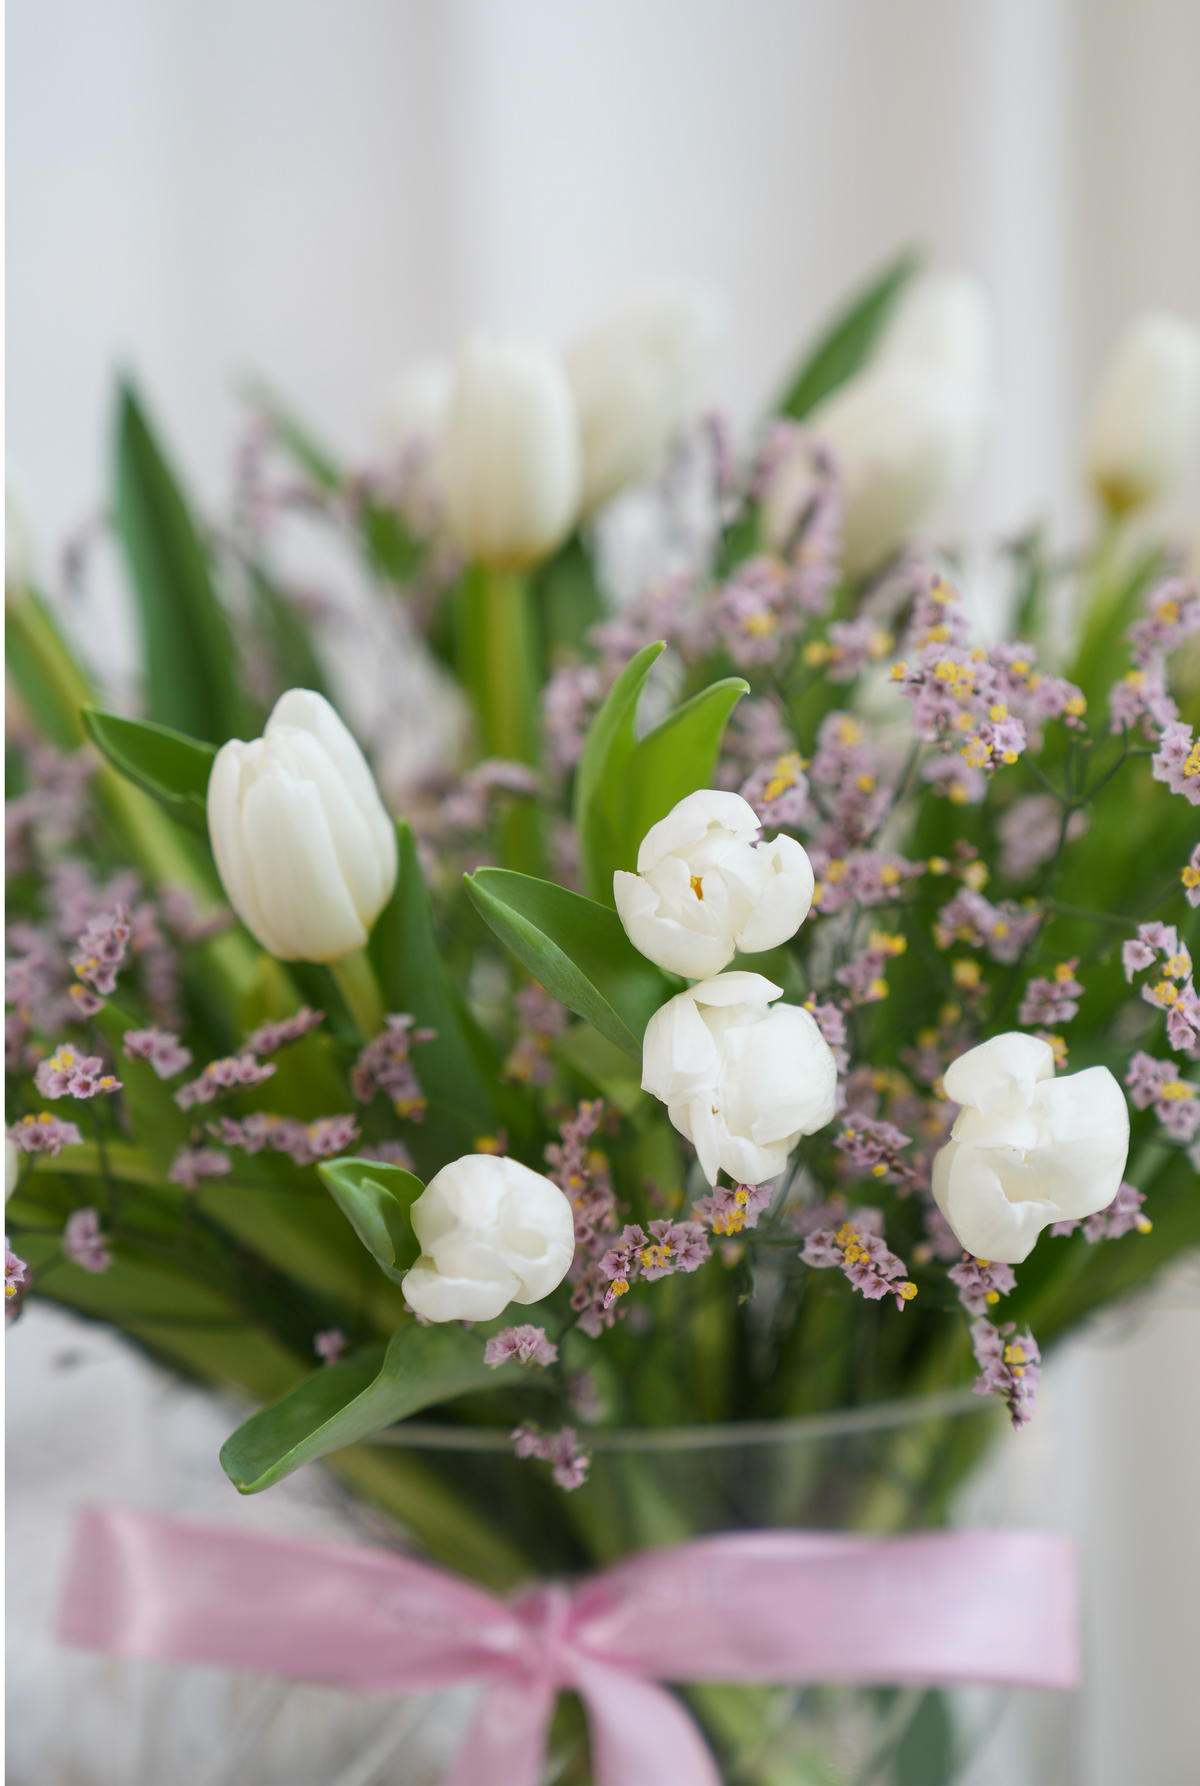 Valentine Luxury White Tulips - Vase